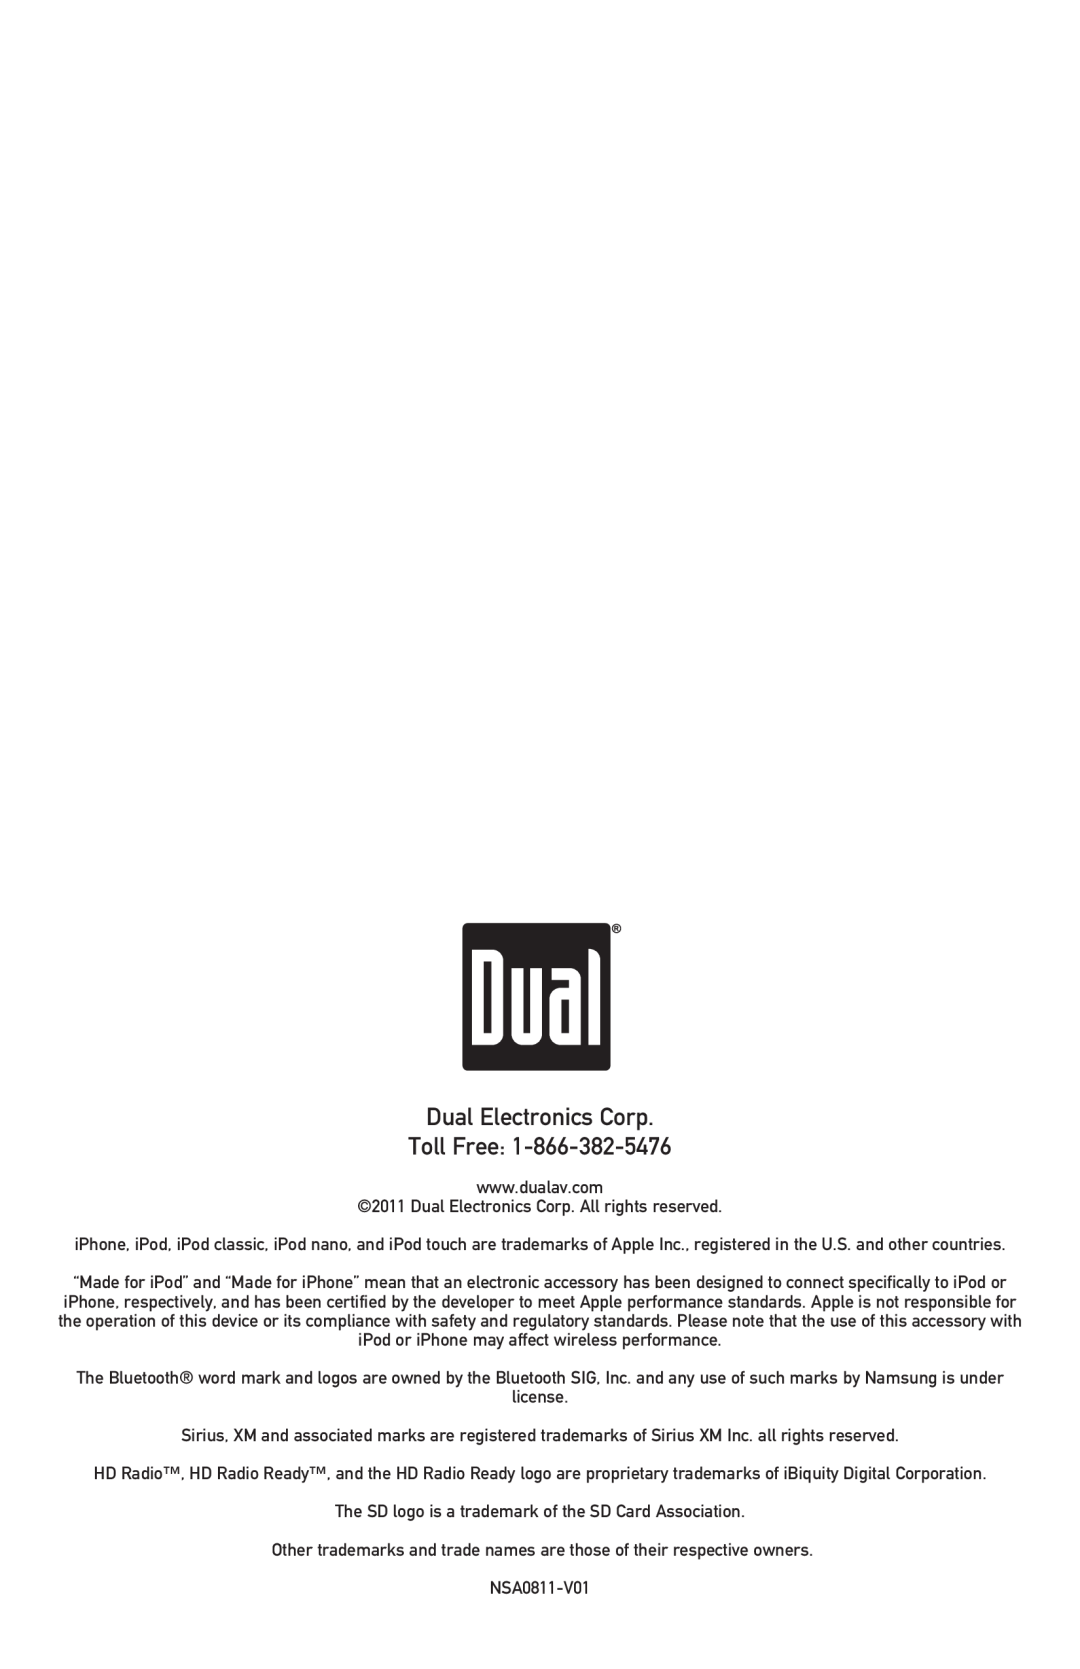 Dual XDMA6540 owner manual Dual Electronics Corp Toll Free 